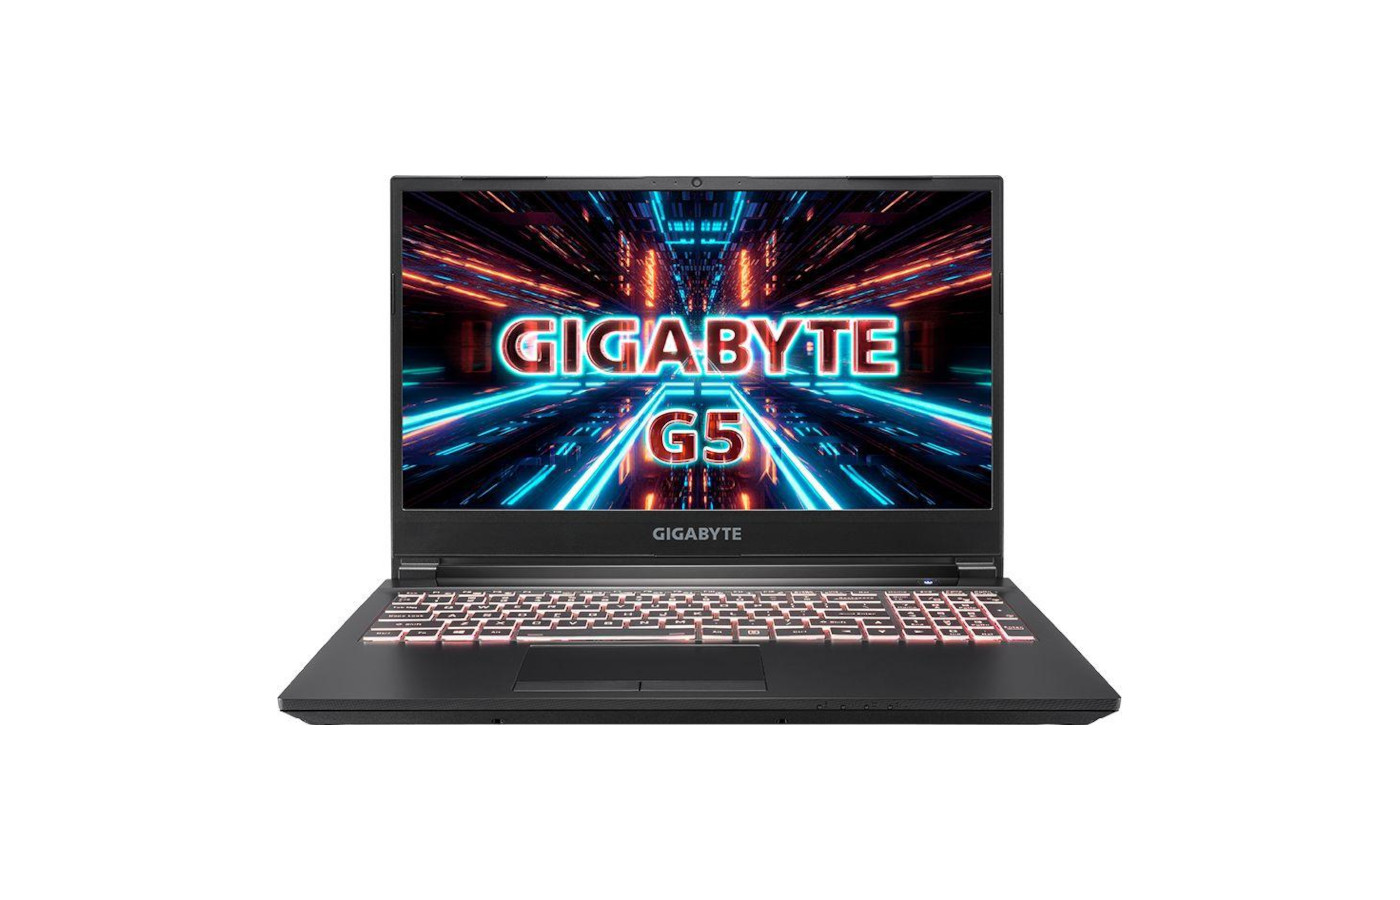 Gigabyte g5 kc. Ноутбук Gigabyte g5 Kc. Gigabyte g5 Kc-5ru1130sh, 15.6". Gigabyte g5 GD-51ru123sd. Gigabyte g5 GD-51de123sd 15.6"FHD i5-11400h rtx3050.